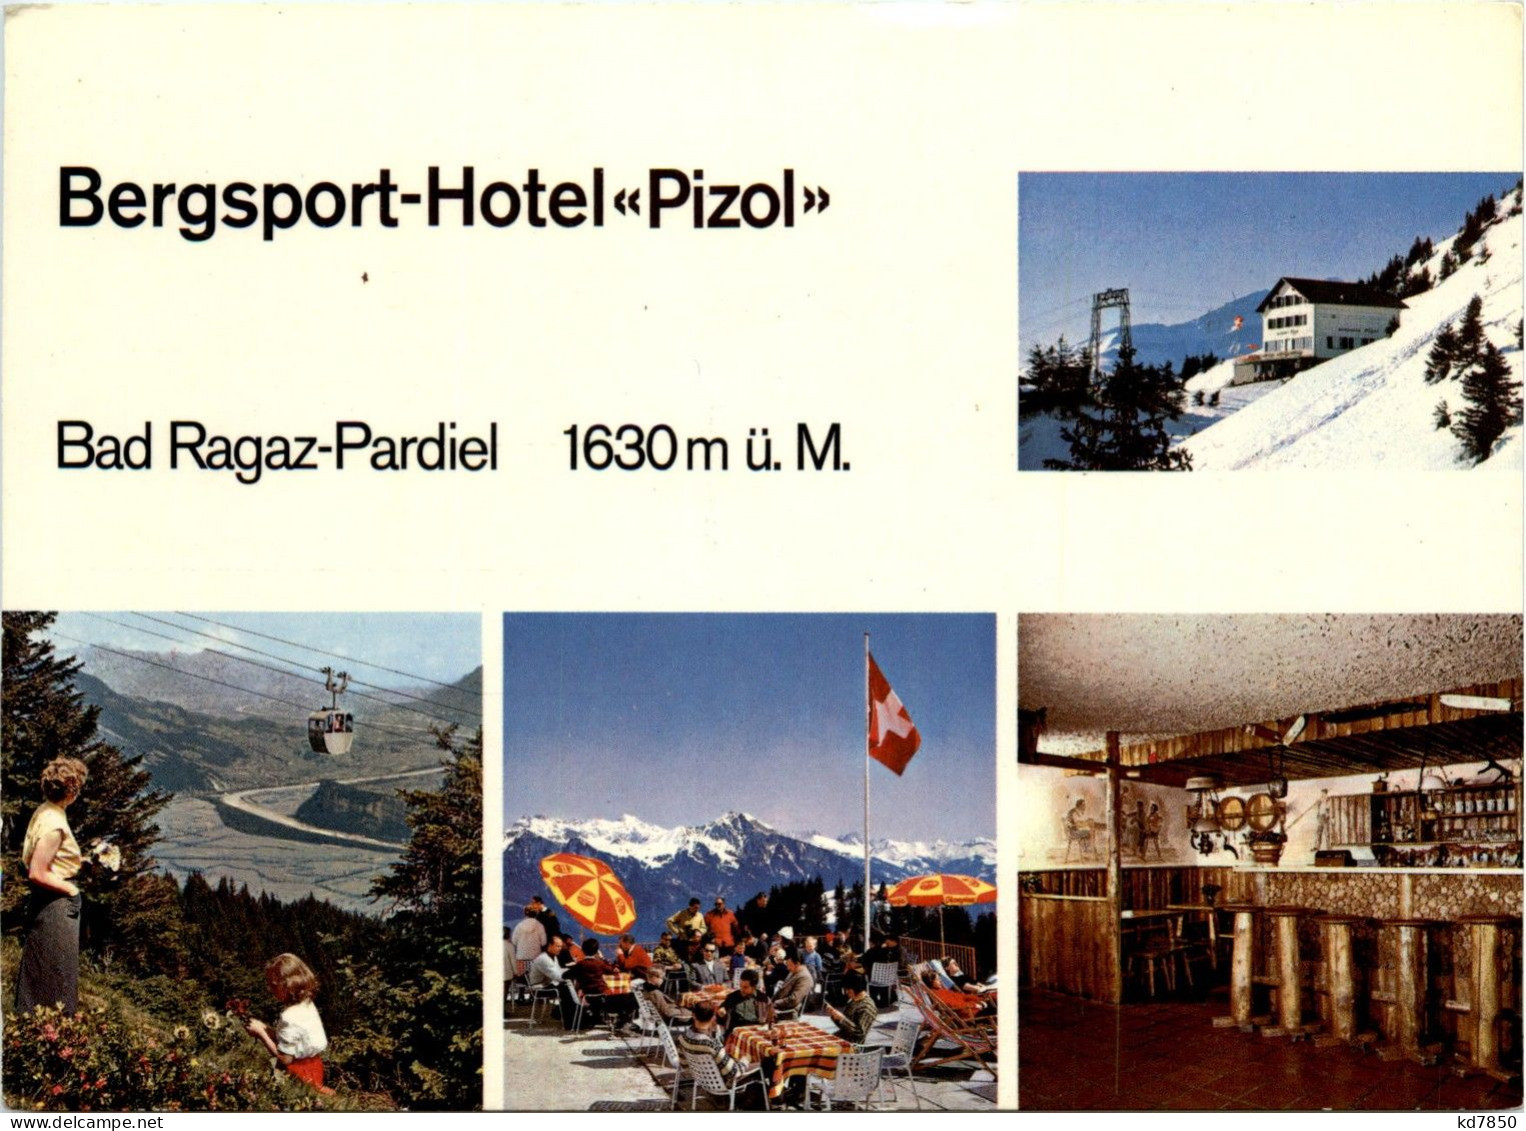 Bad Ragaz-Pardiel - Bergsport Hotel Pizol - Bad Ragaz